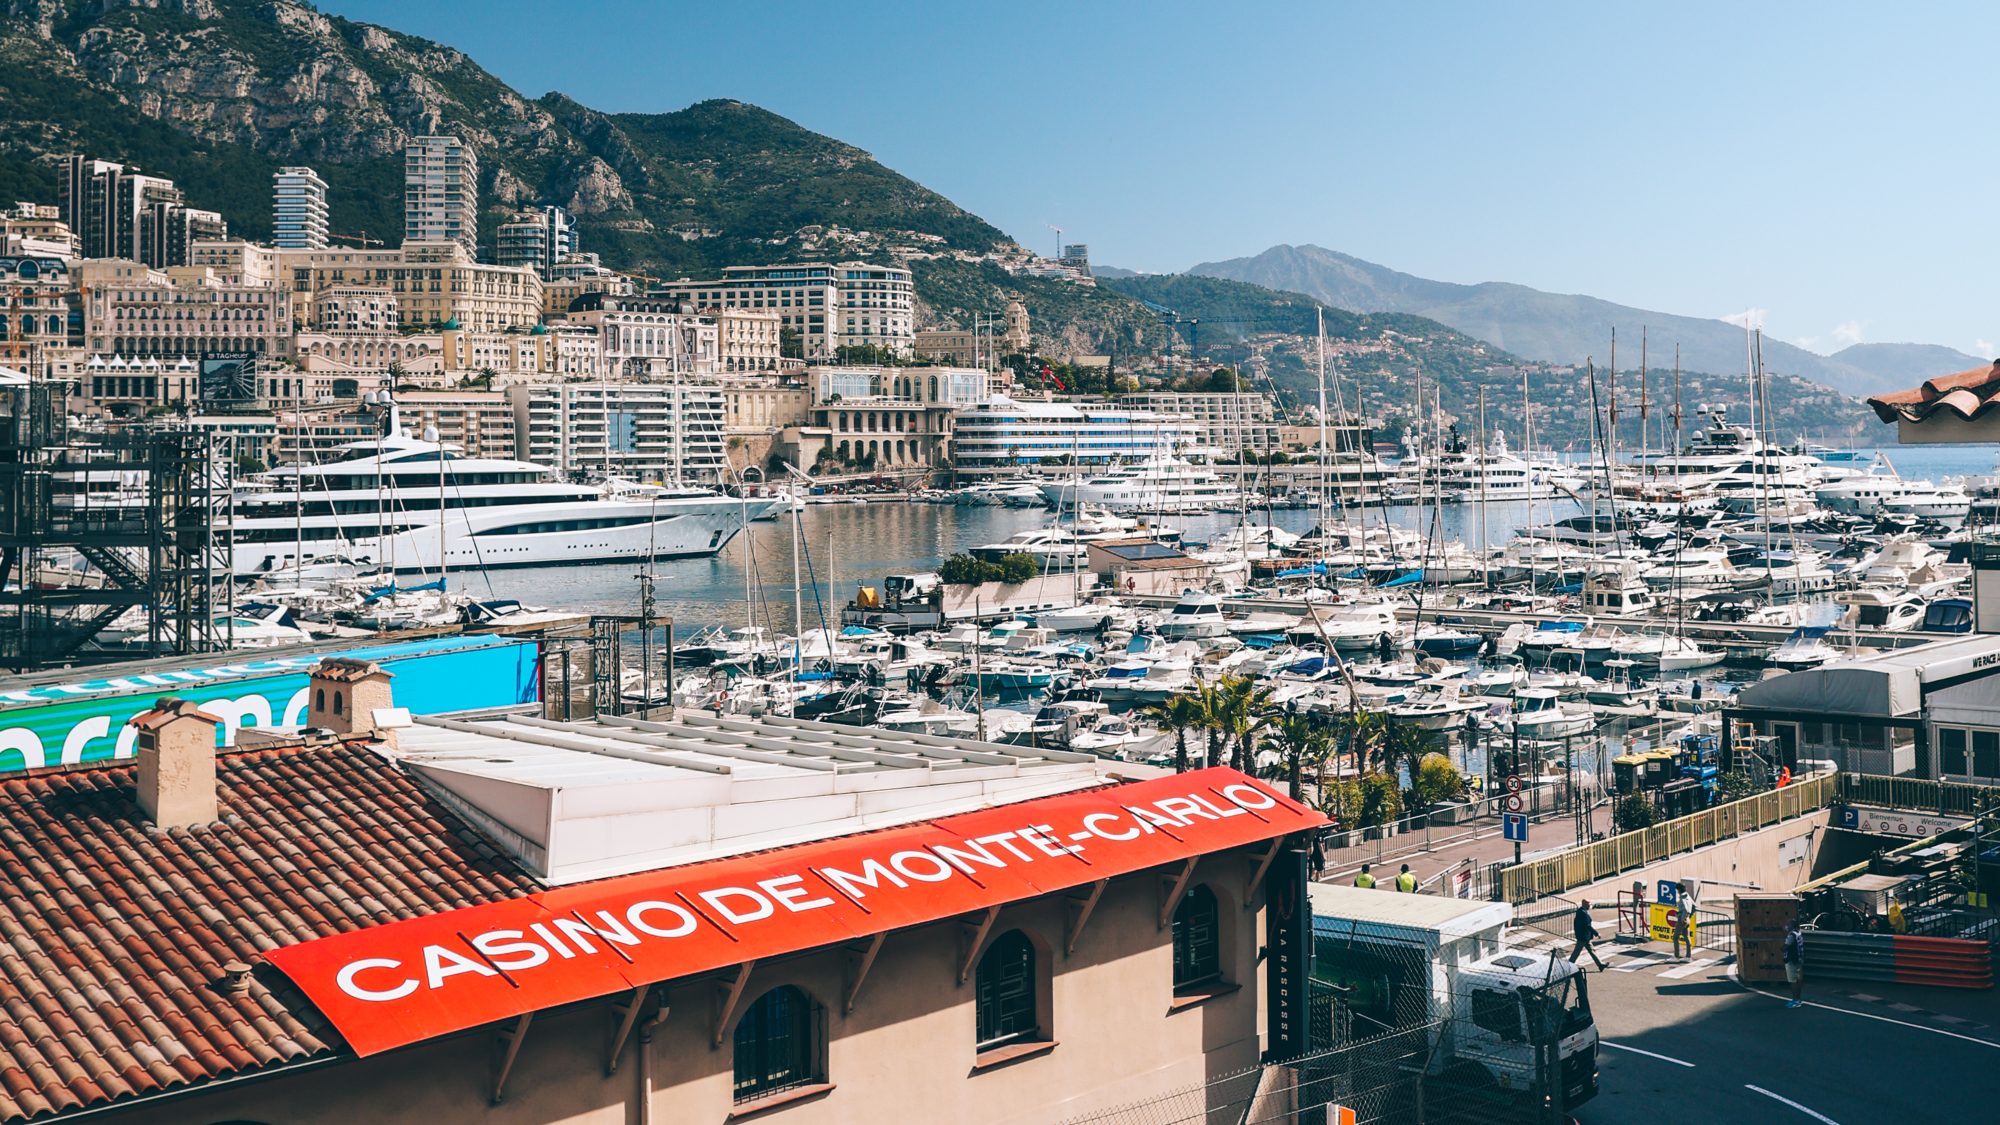 Race Highlights: 2021 Monaco Grand Prix